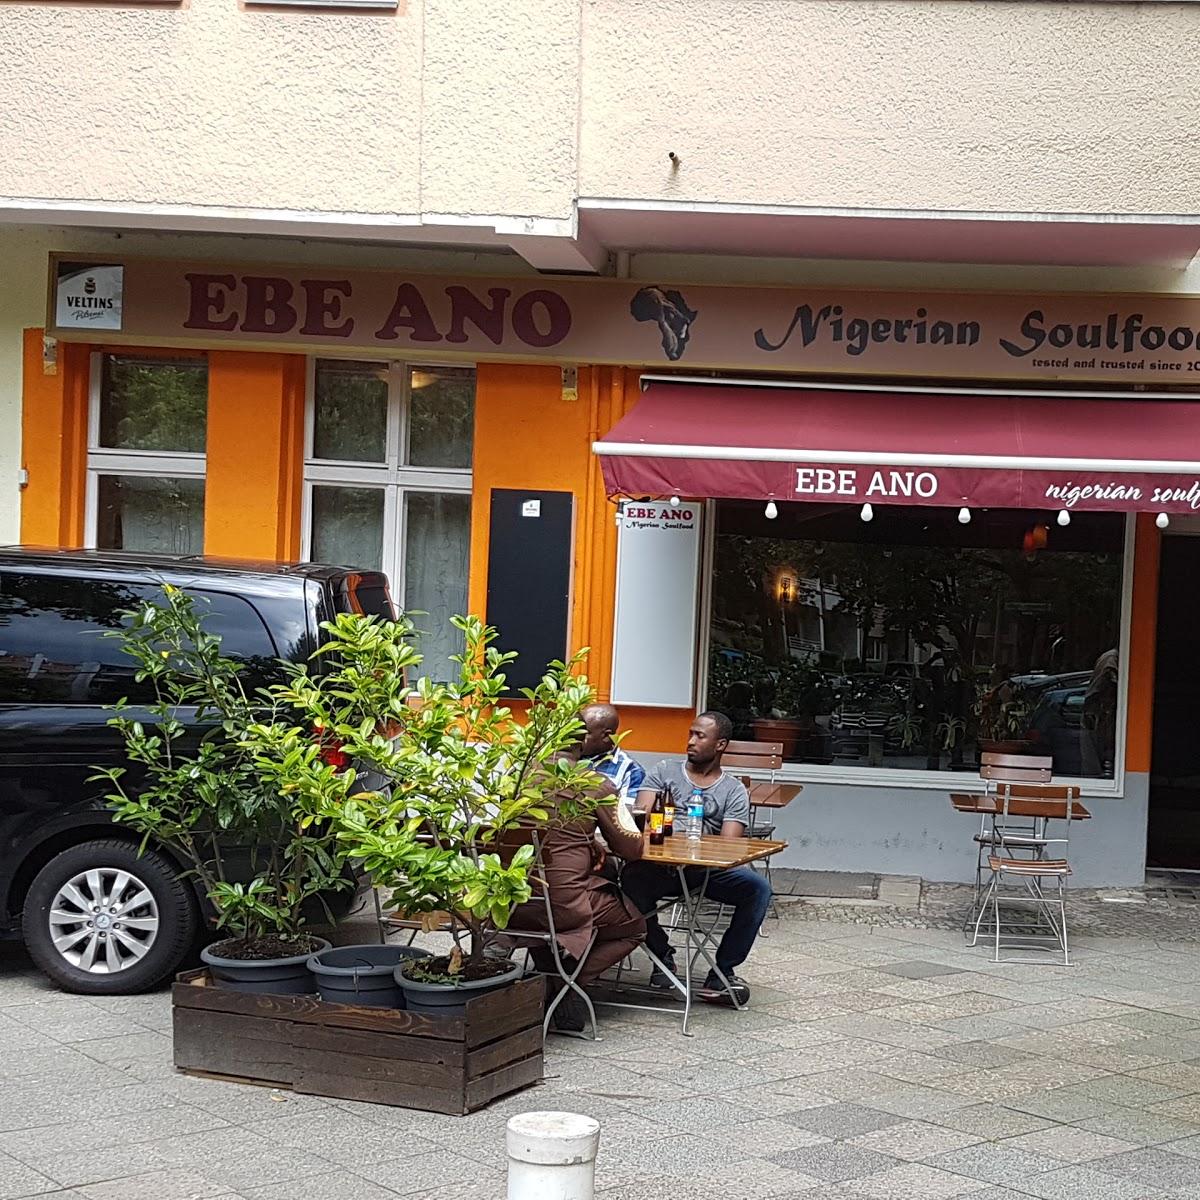 Restaurant "Ebe Ano nigerian soulfood" in  Berlin